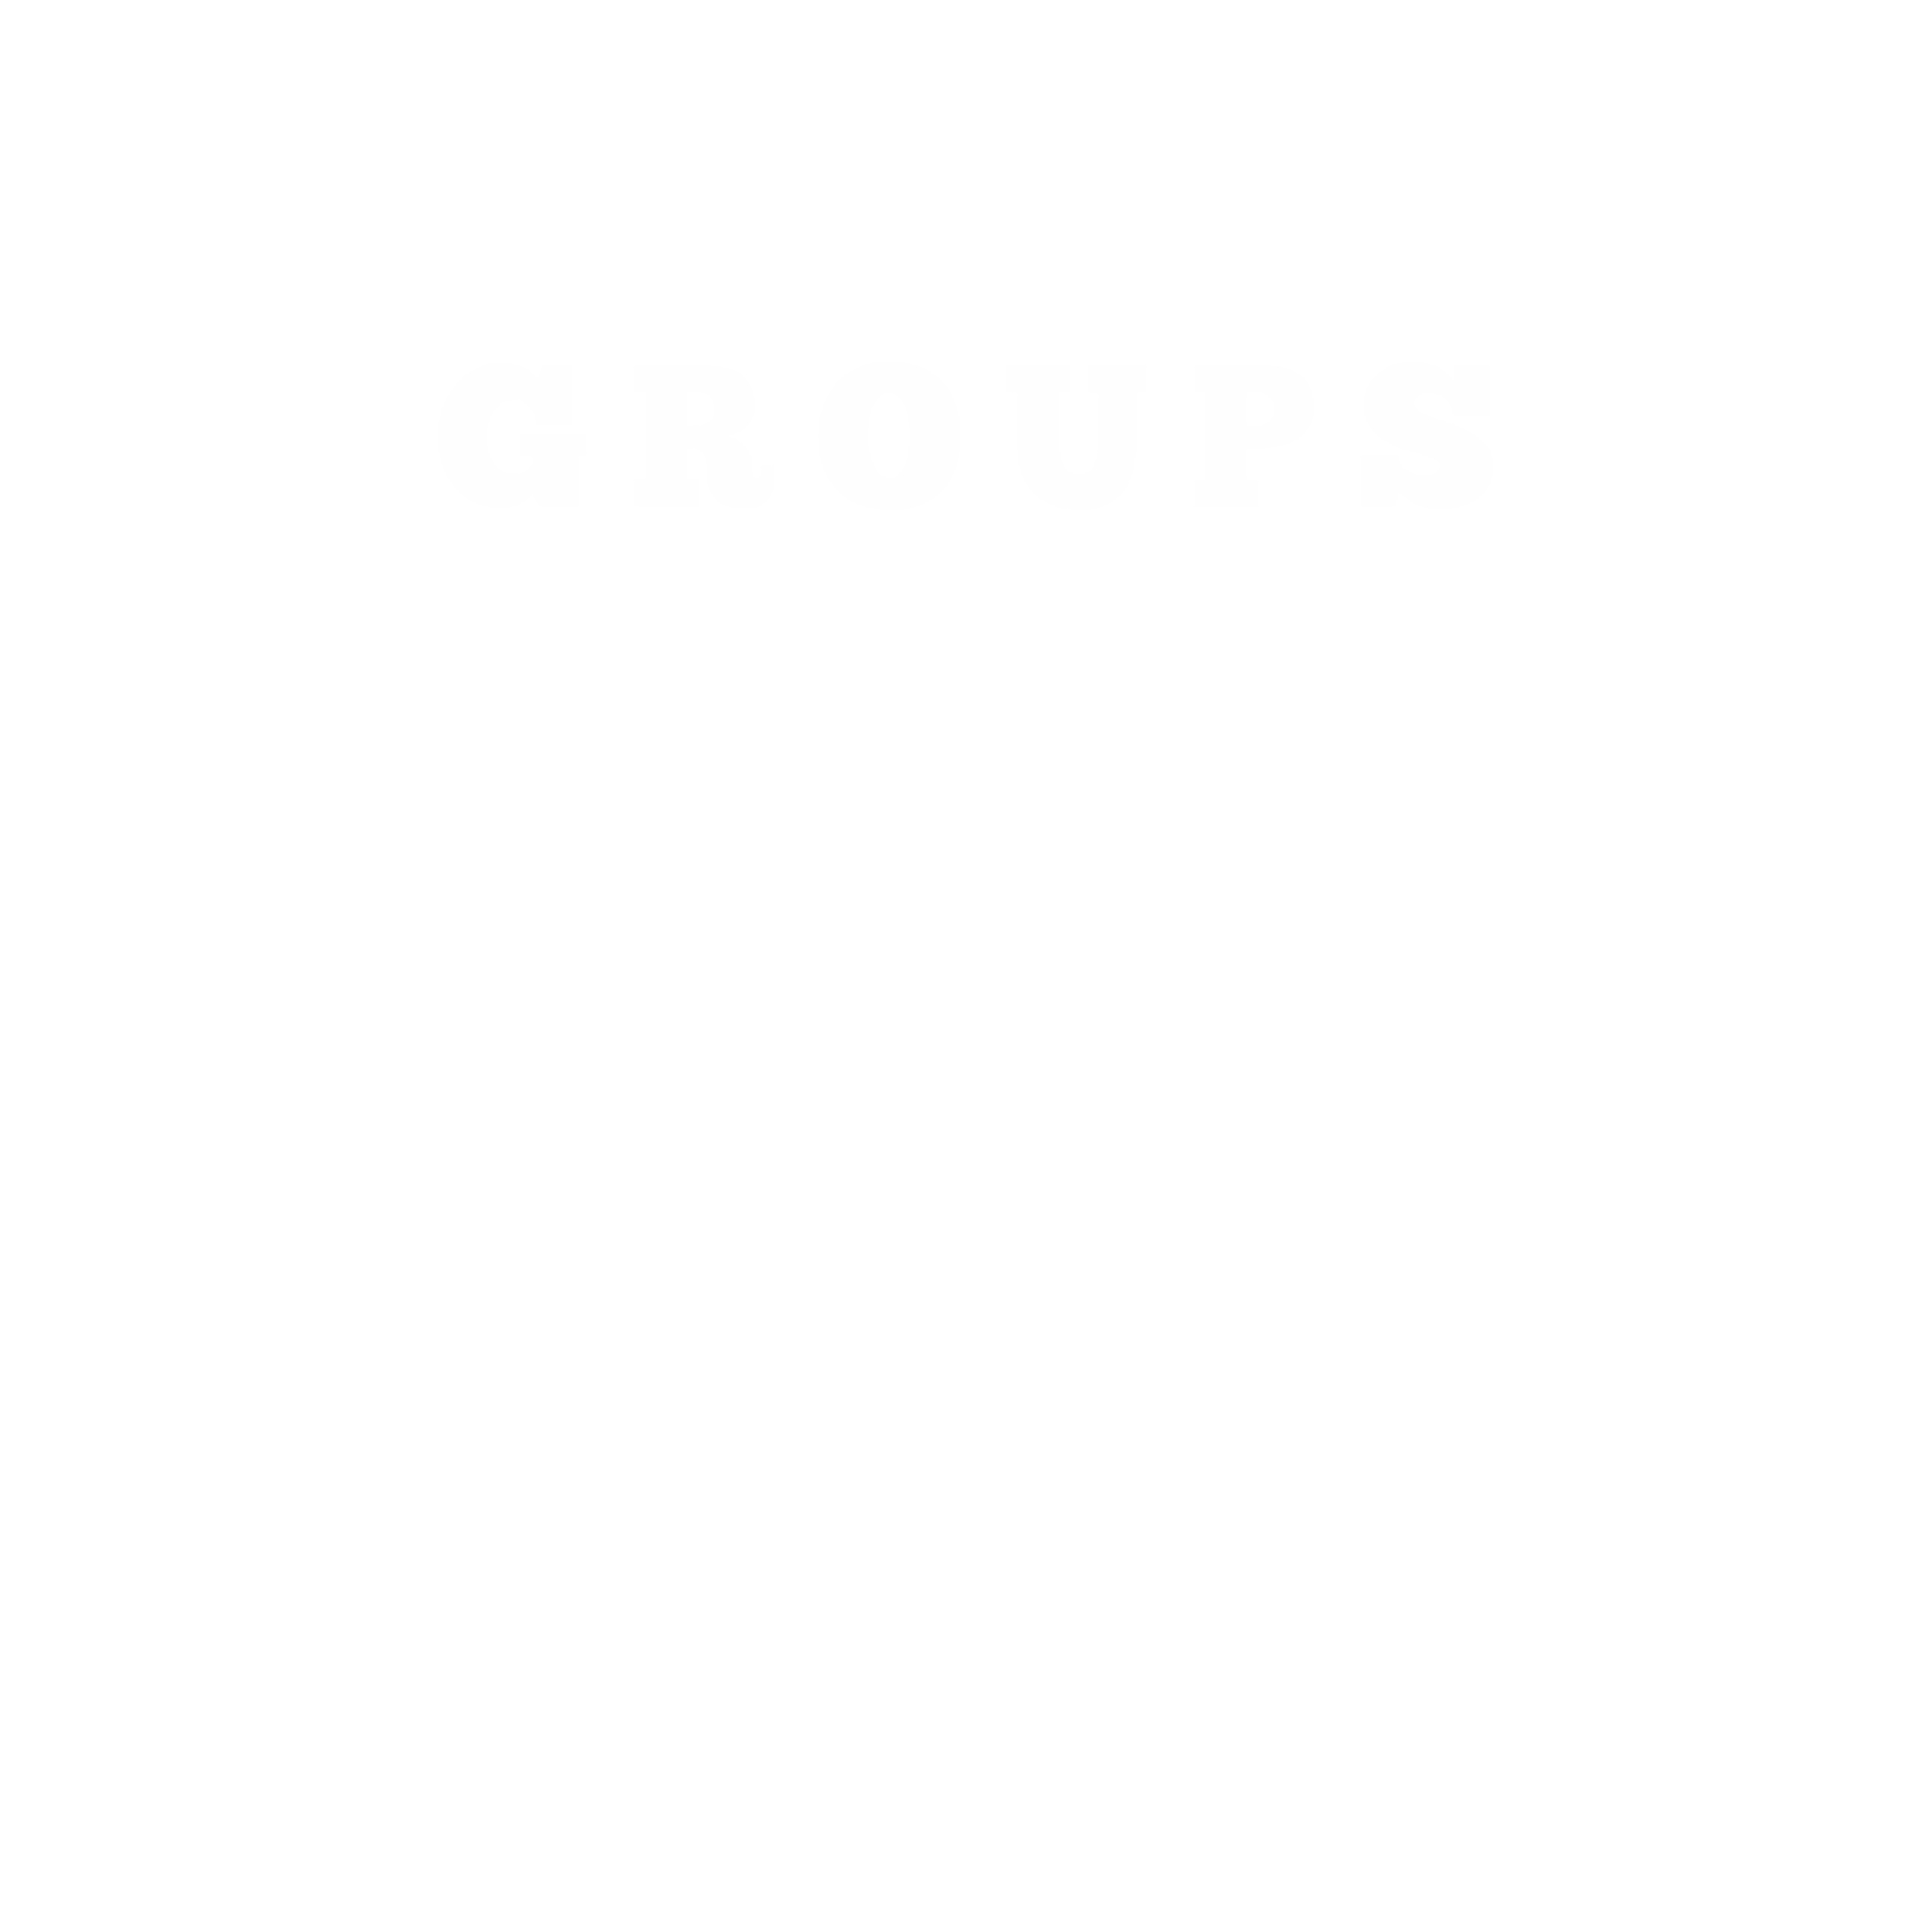 Groups wit